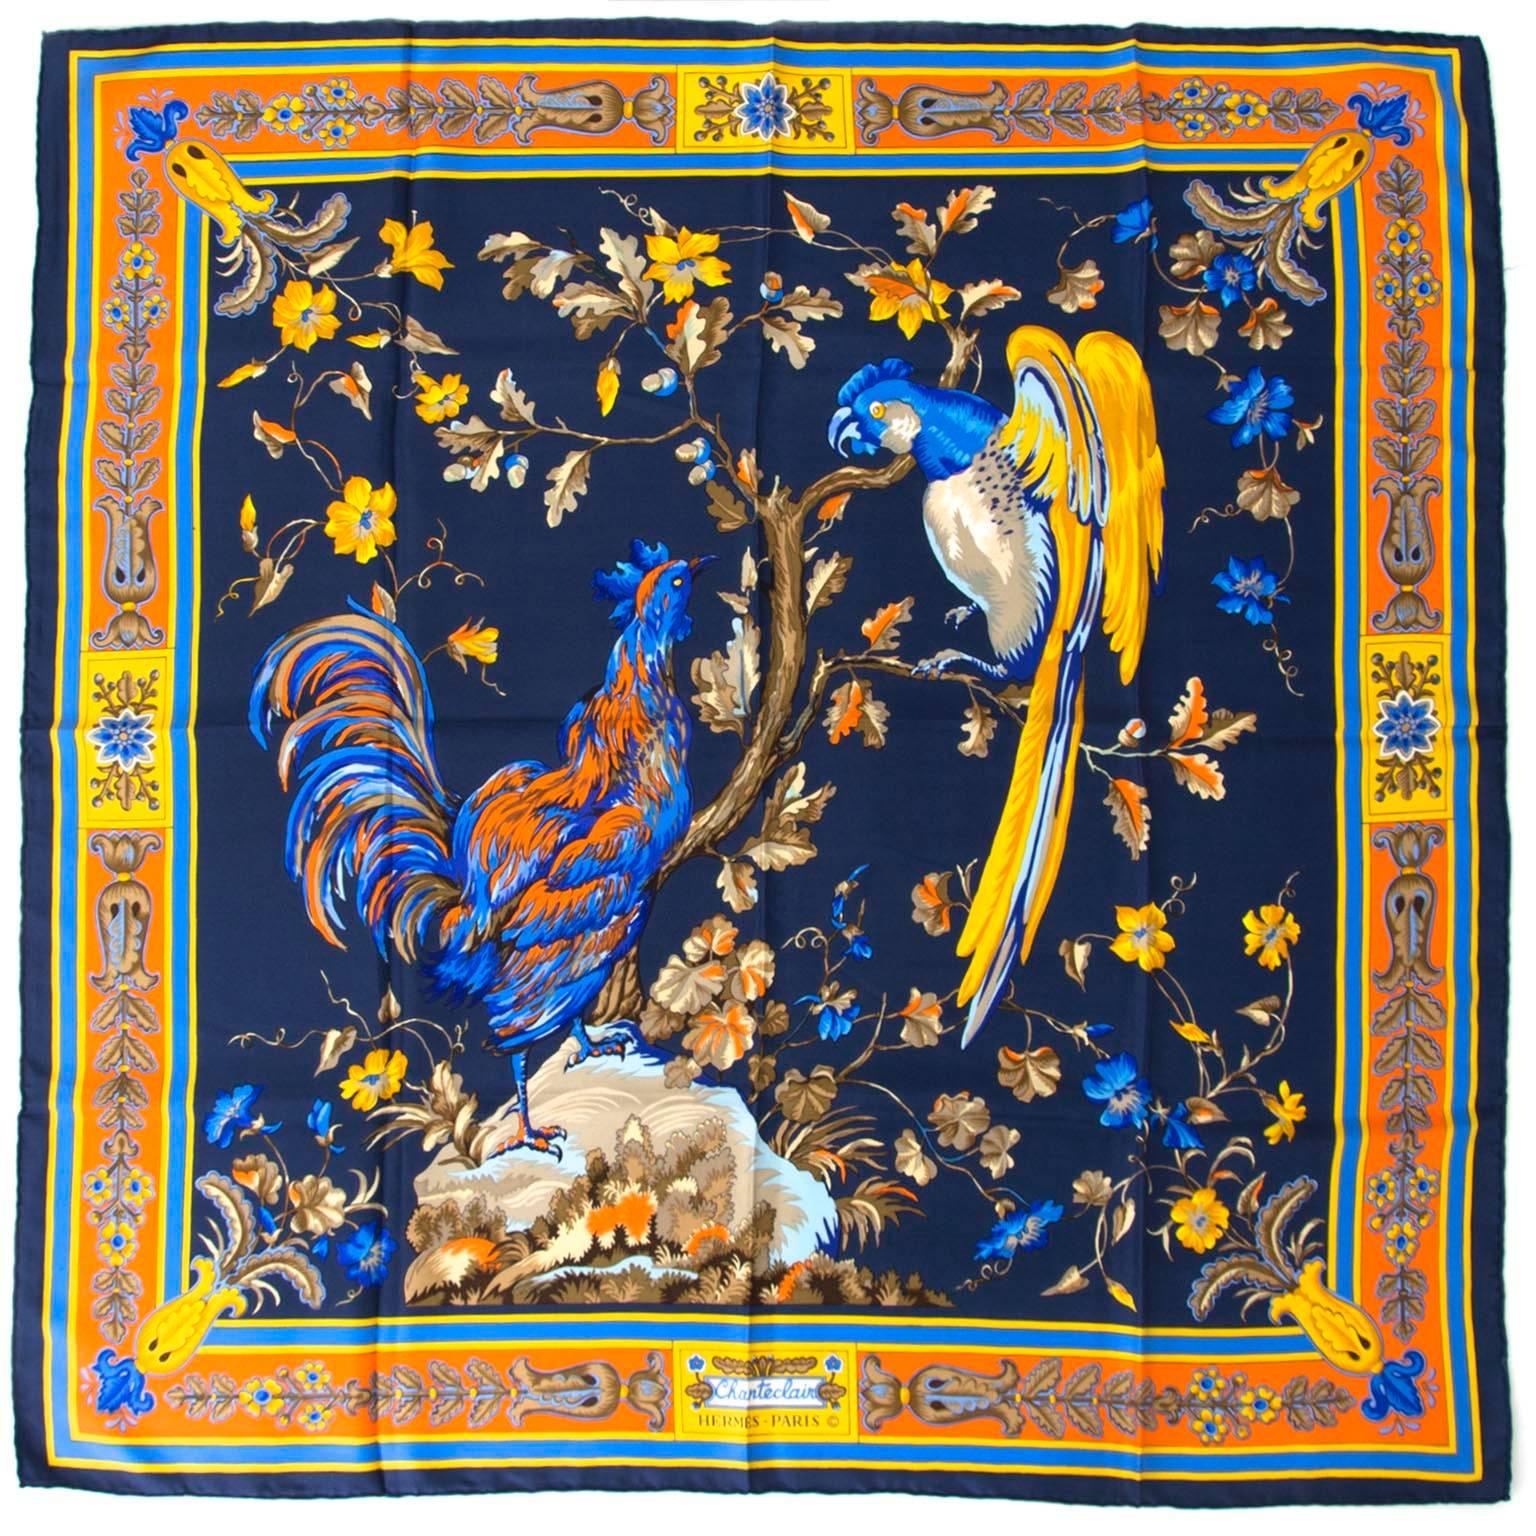 Hermès Carré De Soie scarf in dark blue and orange tones and with parrot design. 

100% silk. 